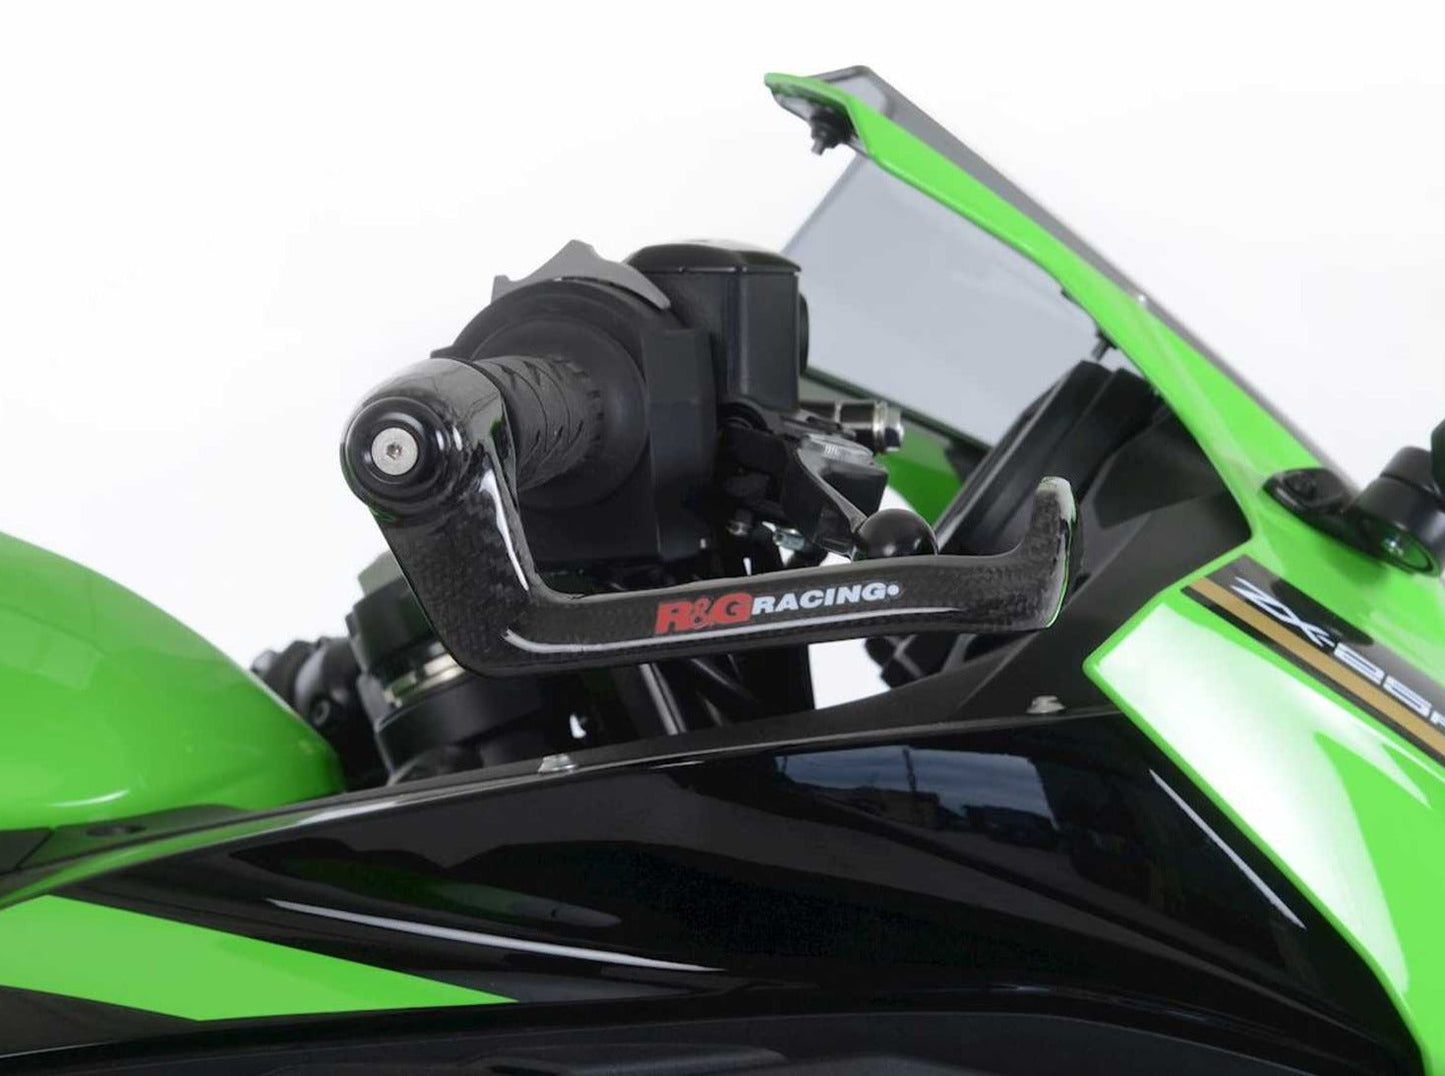 CLG0015 - R&G RACING Husqvarna / KTM / Suzuki / Yamaha Carbon Handlebar Lever Guards